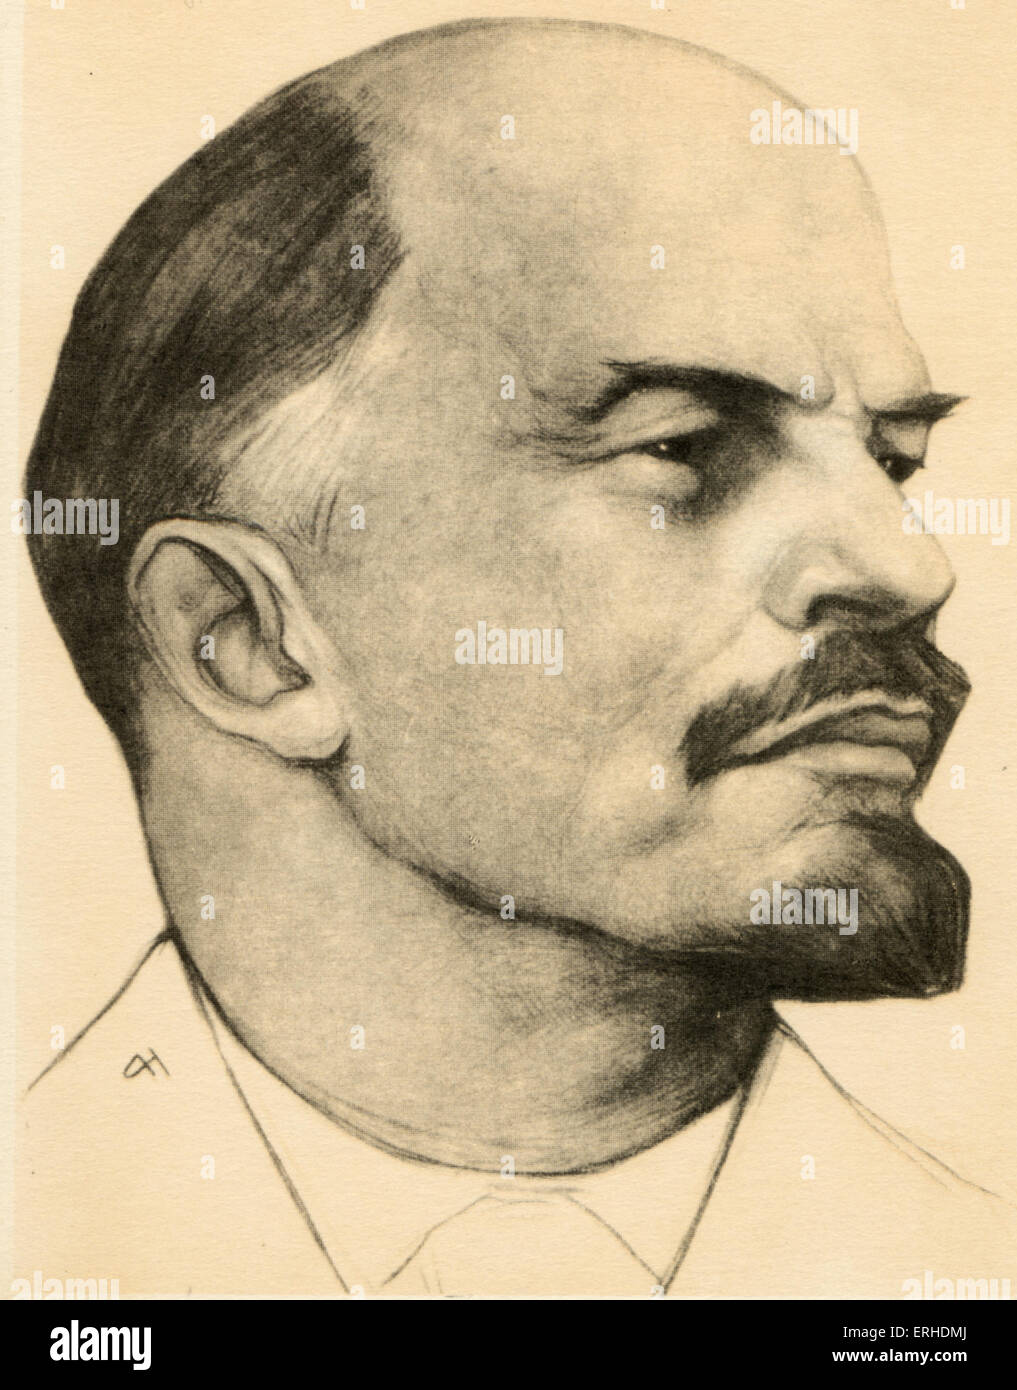 Vladimir Ilich Lenin - portrait. October Revolution, Communism, Marxism, Soviet Union.  Chairman of the Council of People's Stock Photo